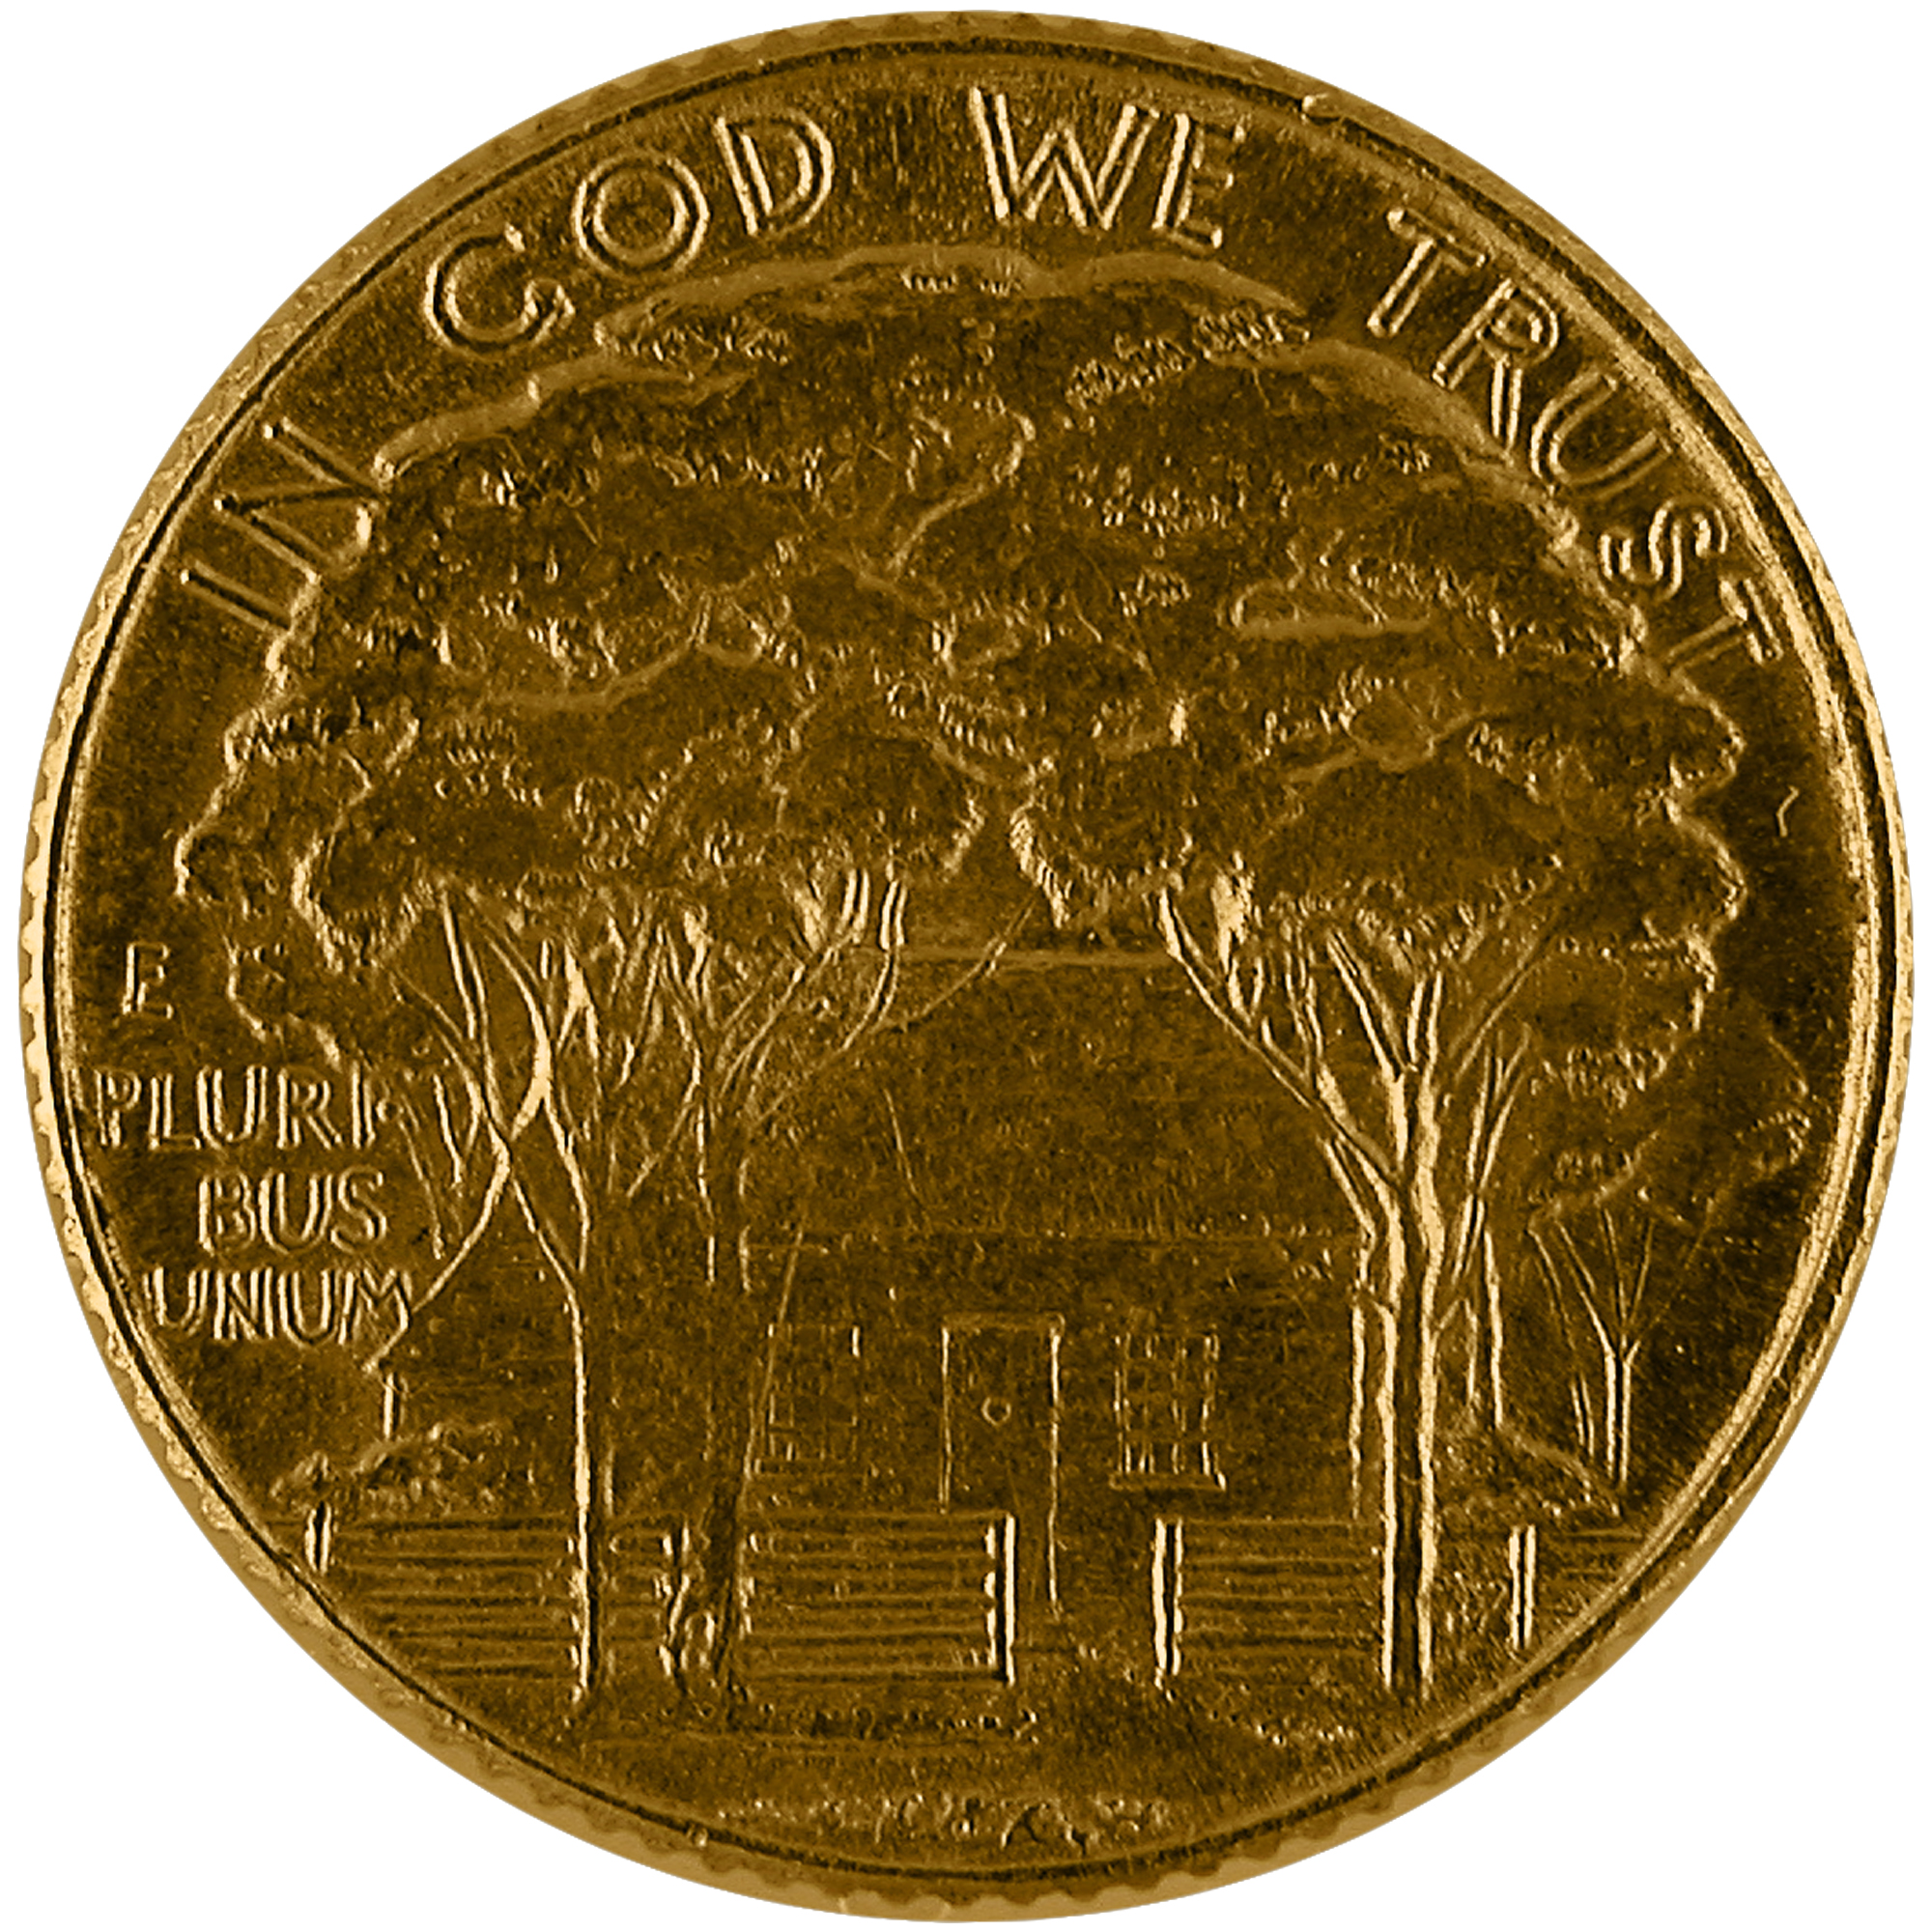 1922 Ulysses S. Grant Memorial Commemorative Gold One Dollar Coin Reverse